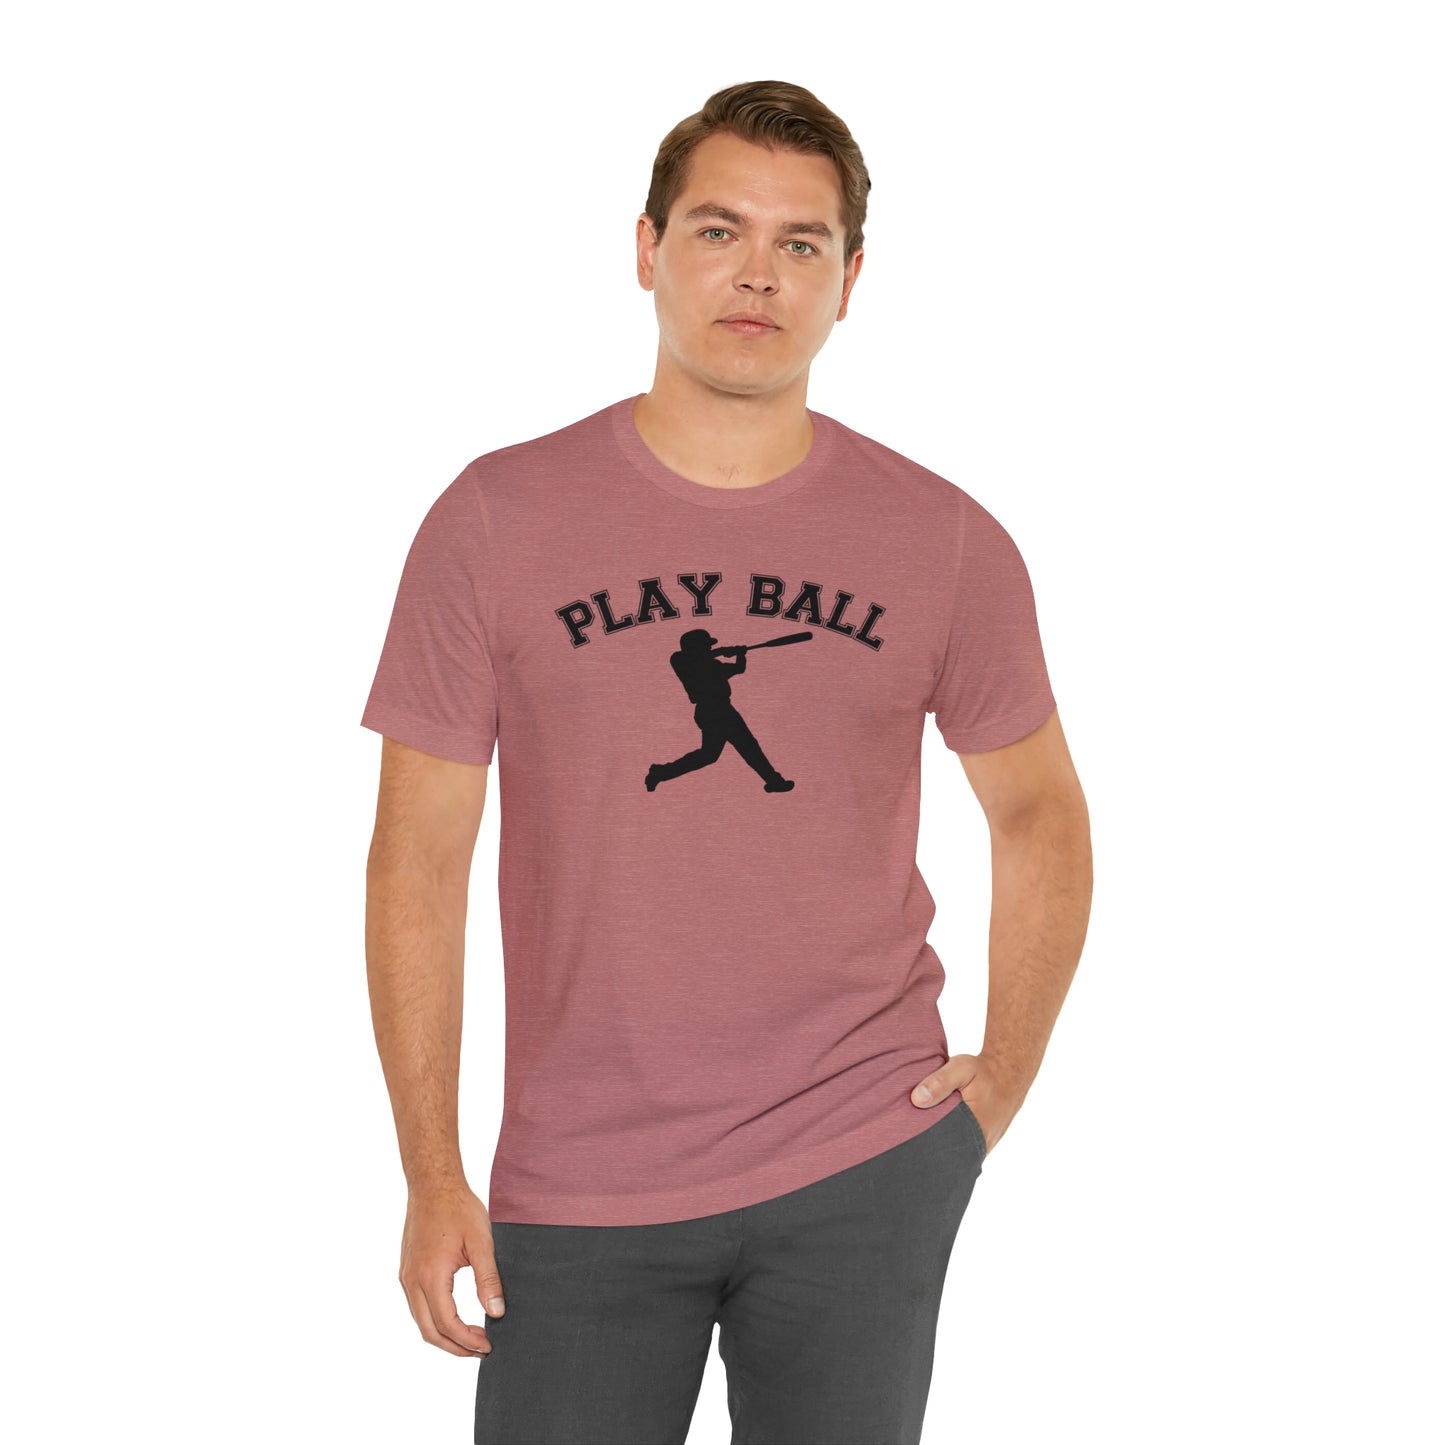 Baseball Game Fan Shirt for Her, Play Ball Shirt, Game Day Shirt, Cute Baseball Shirt for Women, Baseball Shirt for Women, T394